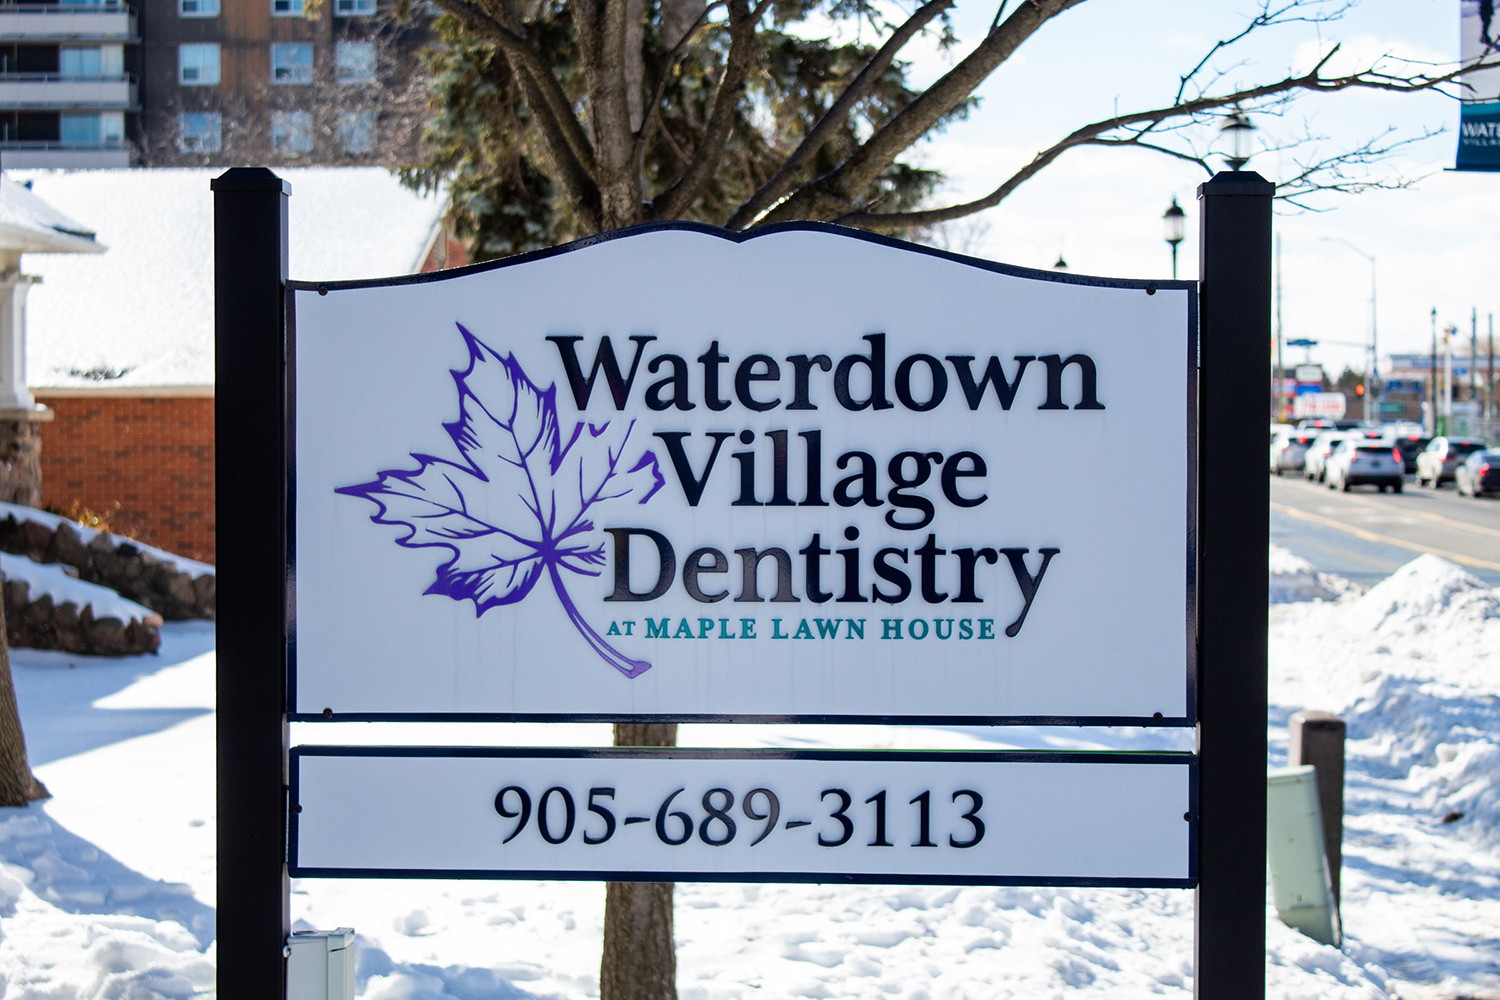 Our Waterdown dental office